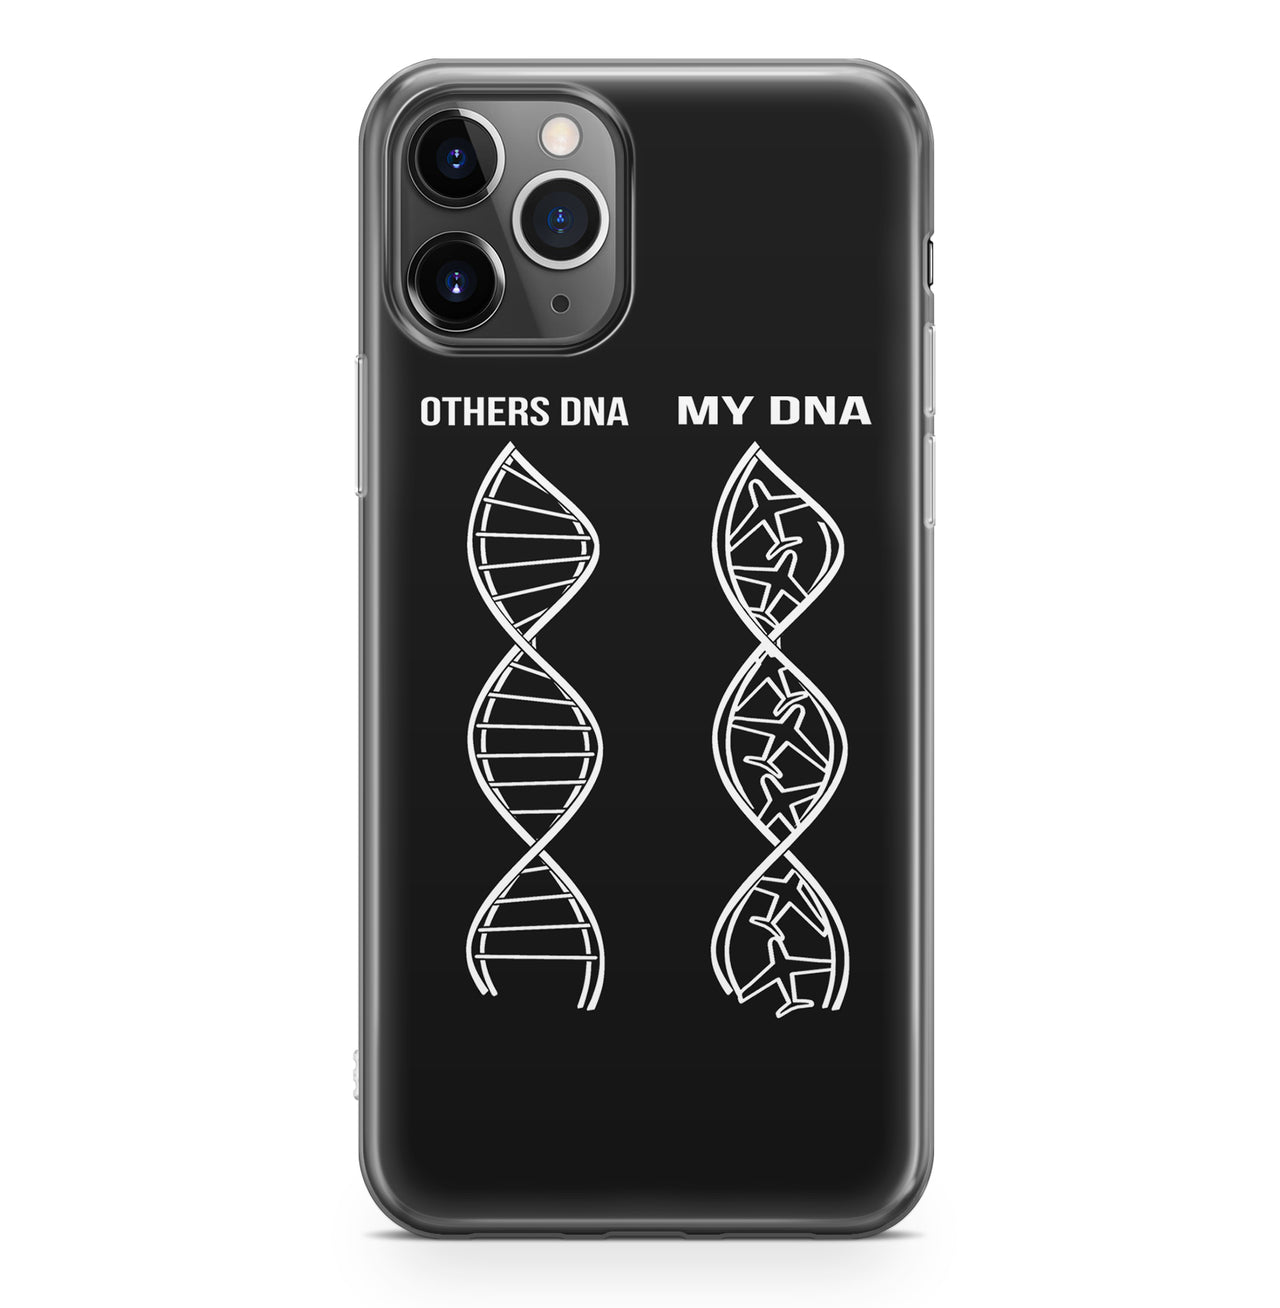 Aviation DNA Designed iPhone Cases